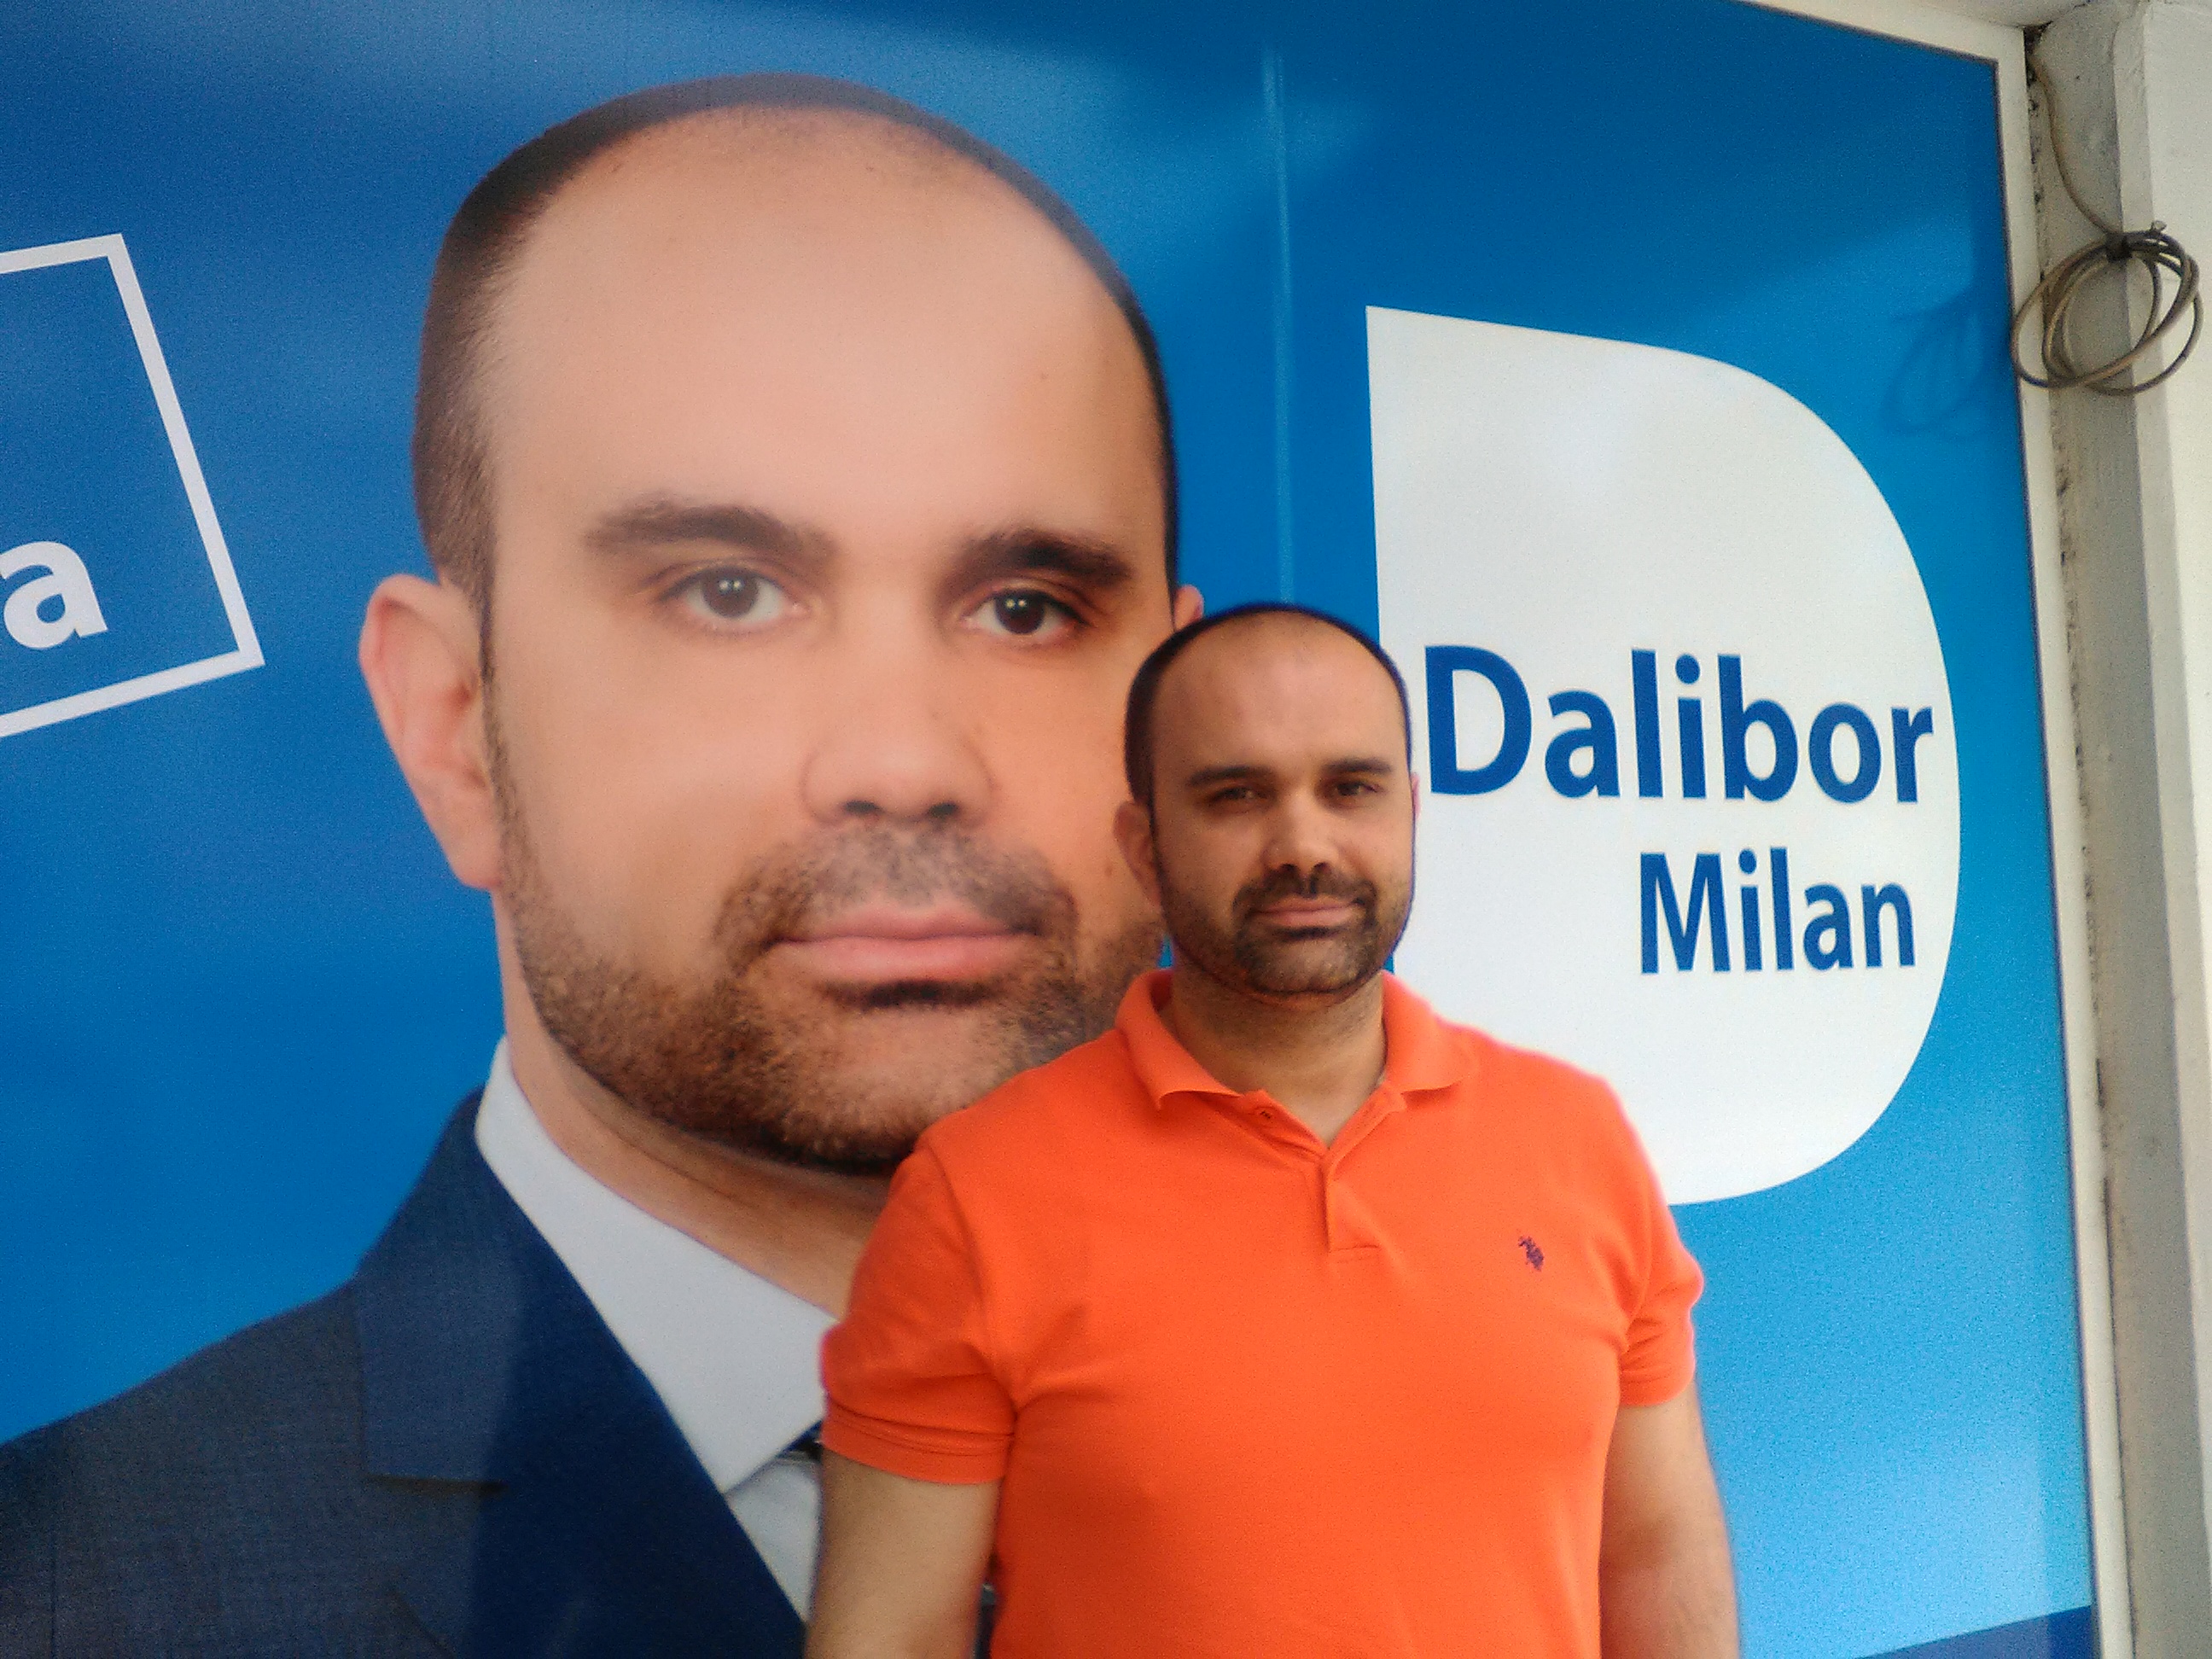 Dalibor Milan